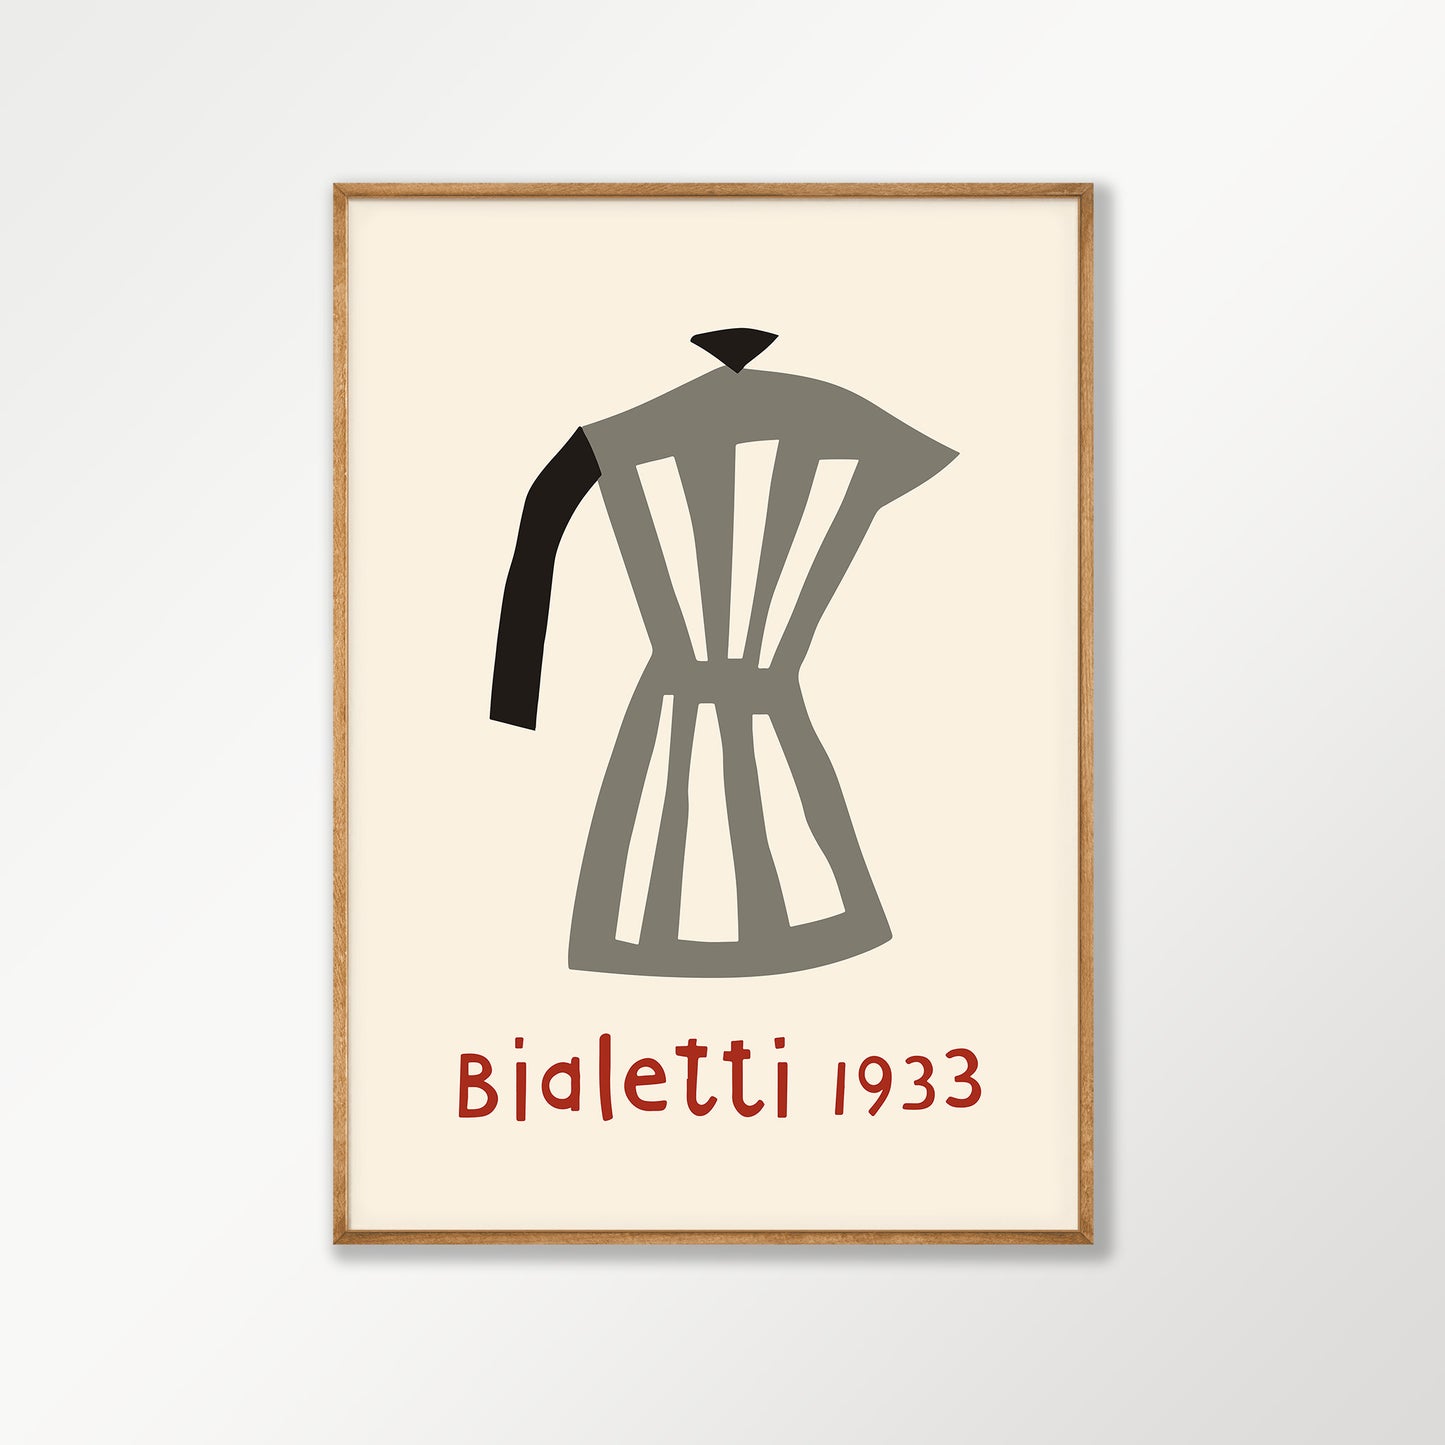 Bialetti 1933